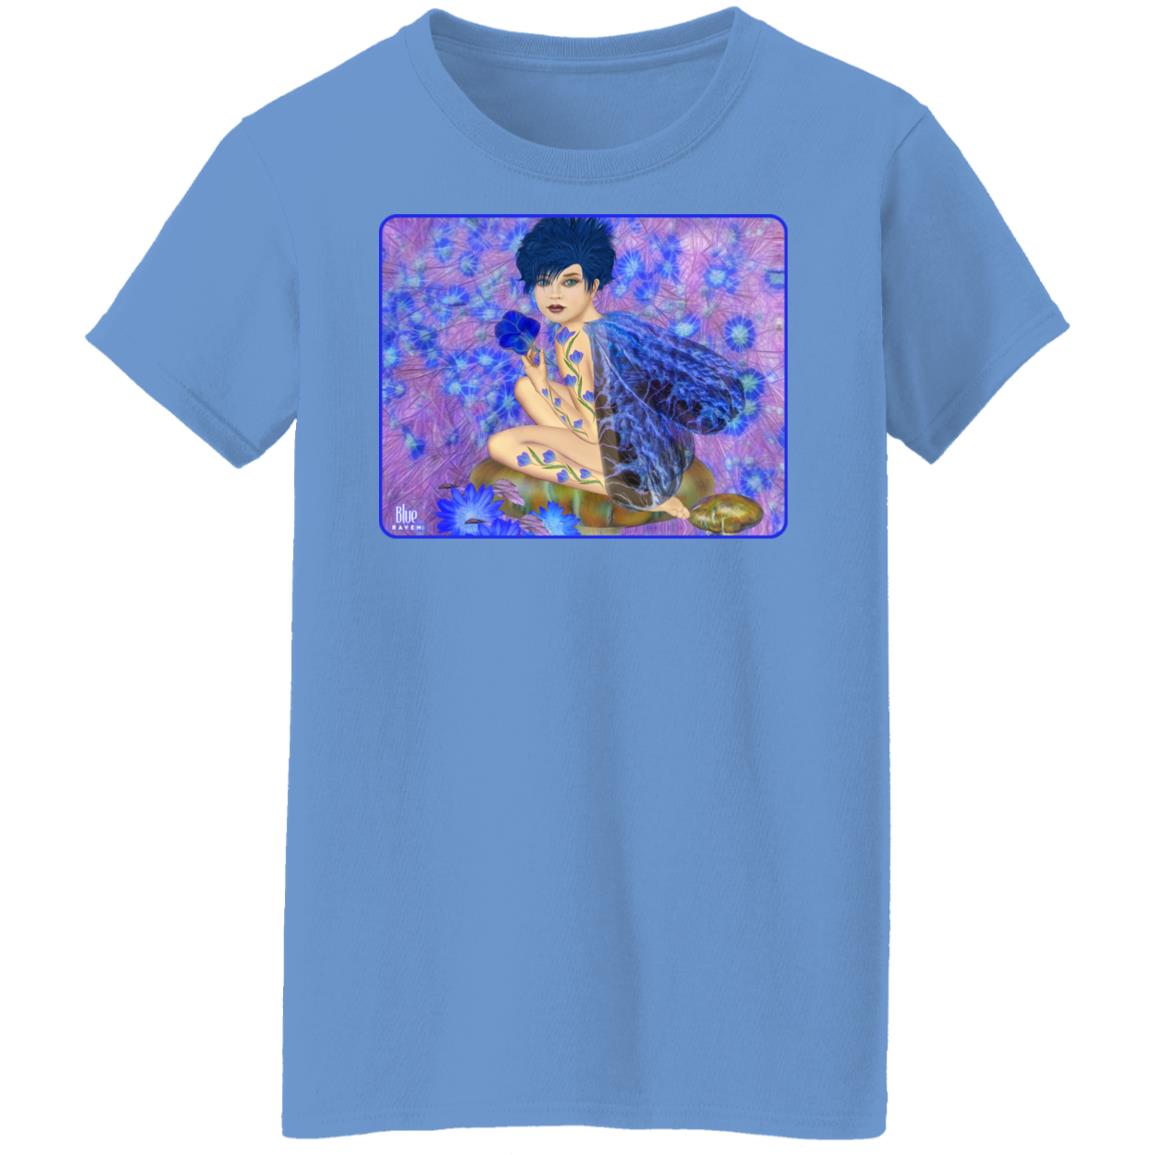 Blue Fairy - Women's Relaxed Fit T-Shirt